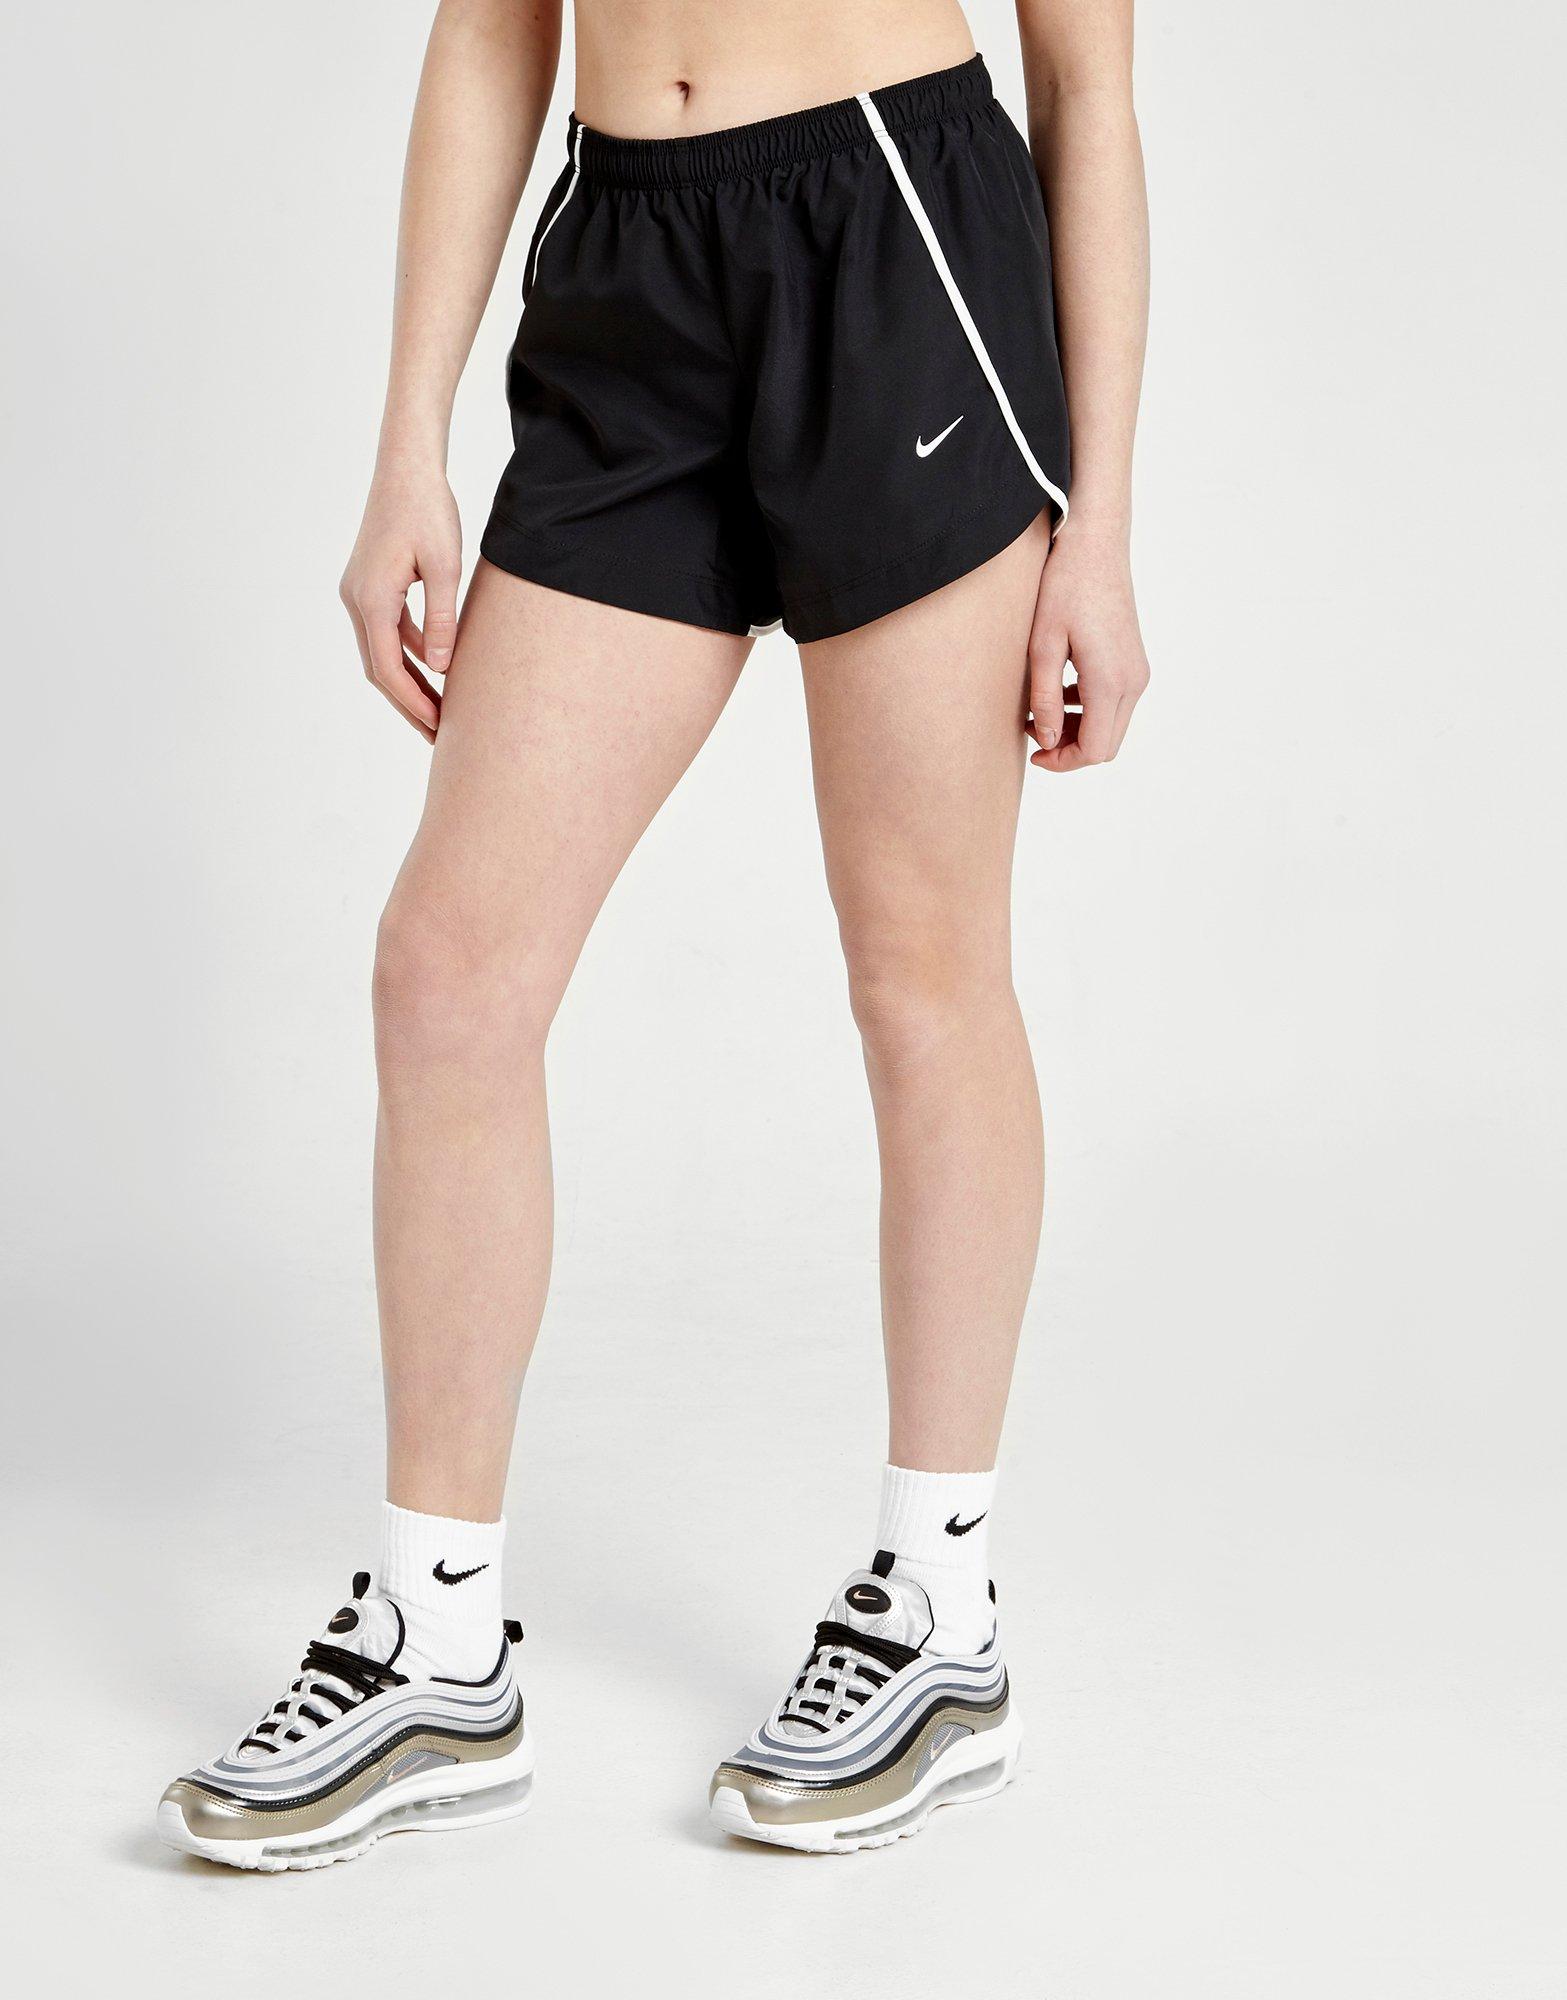 nike girls sports shorts